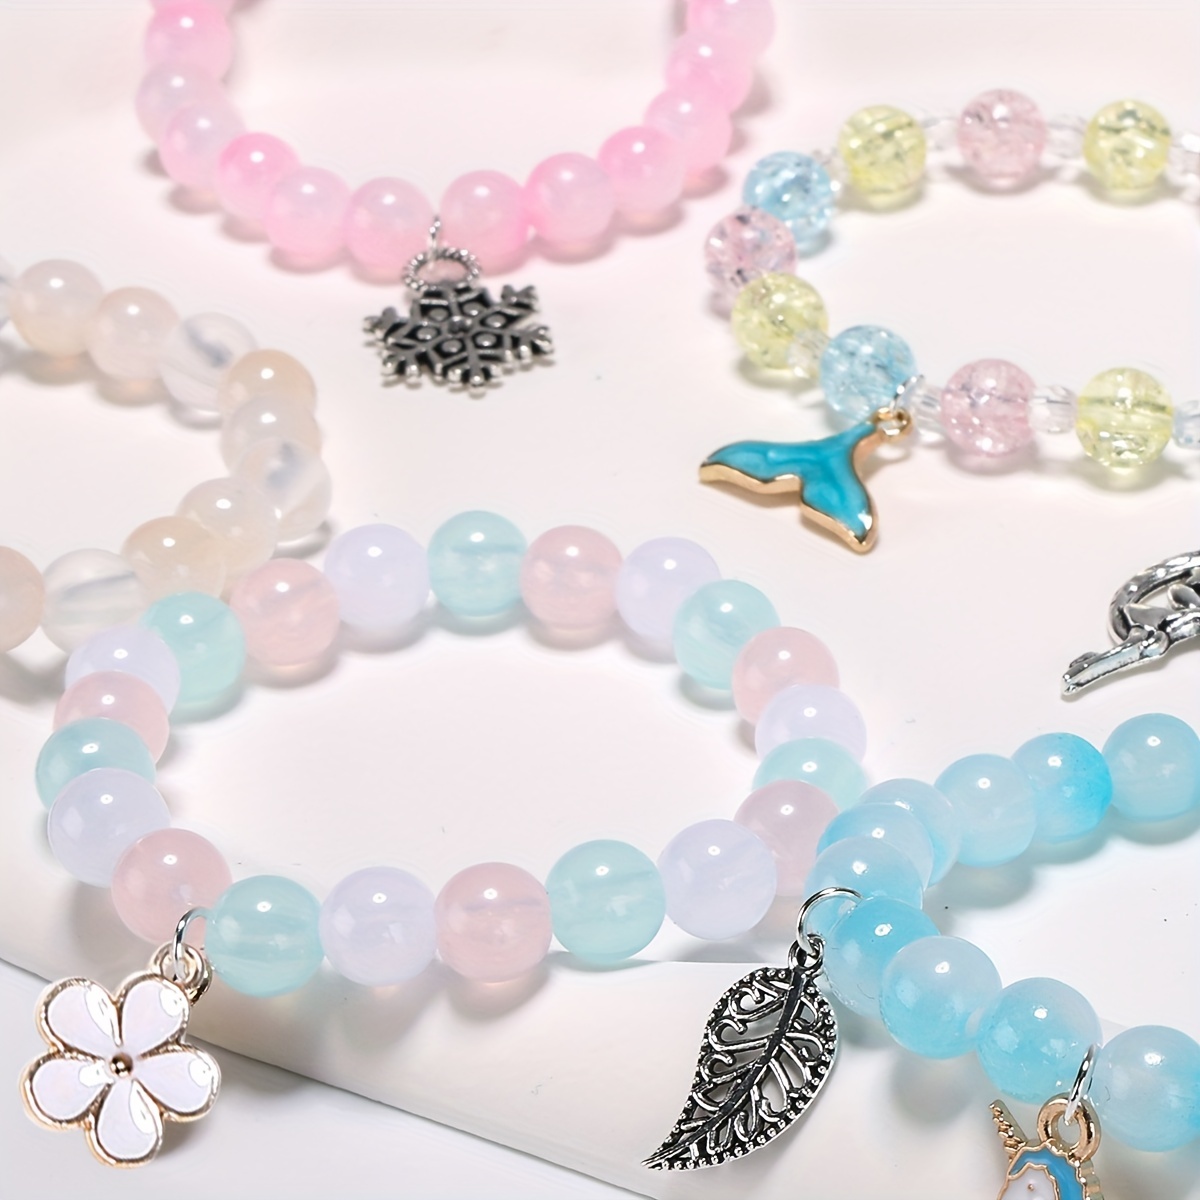 DIY Beads Bracelet Making Kit for Girls Birthday Gift, 8mm Gradient Beads  for Jewelry Making Kit with Pendant